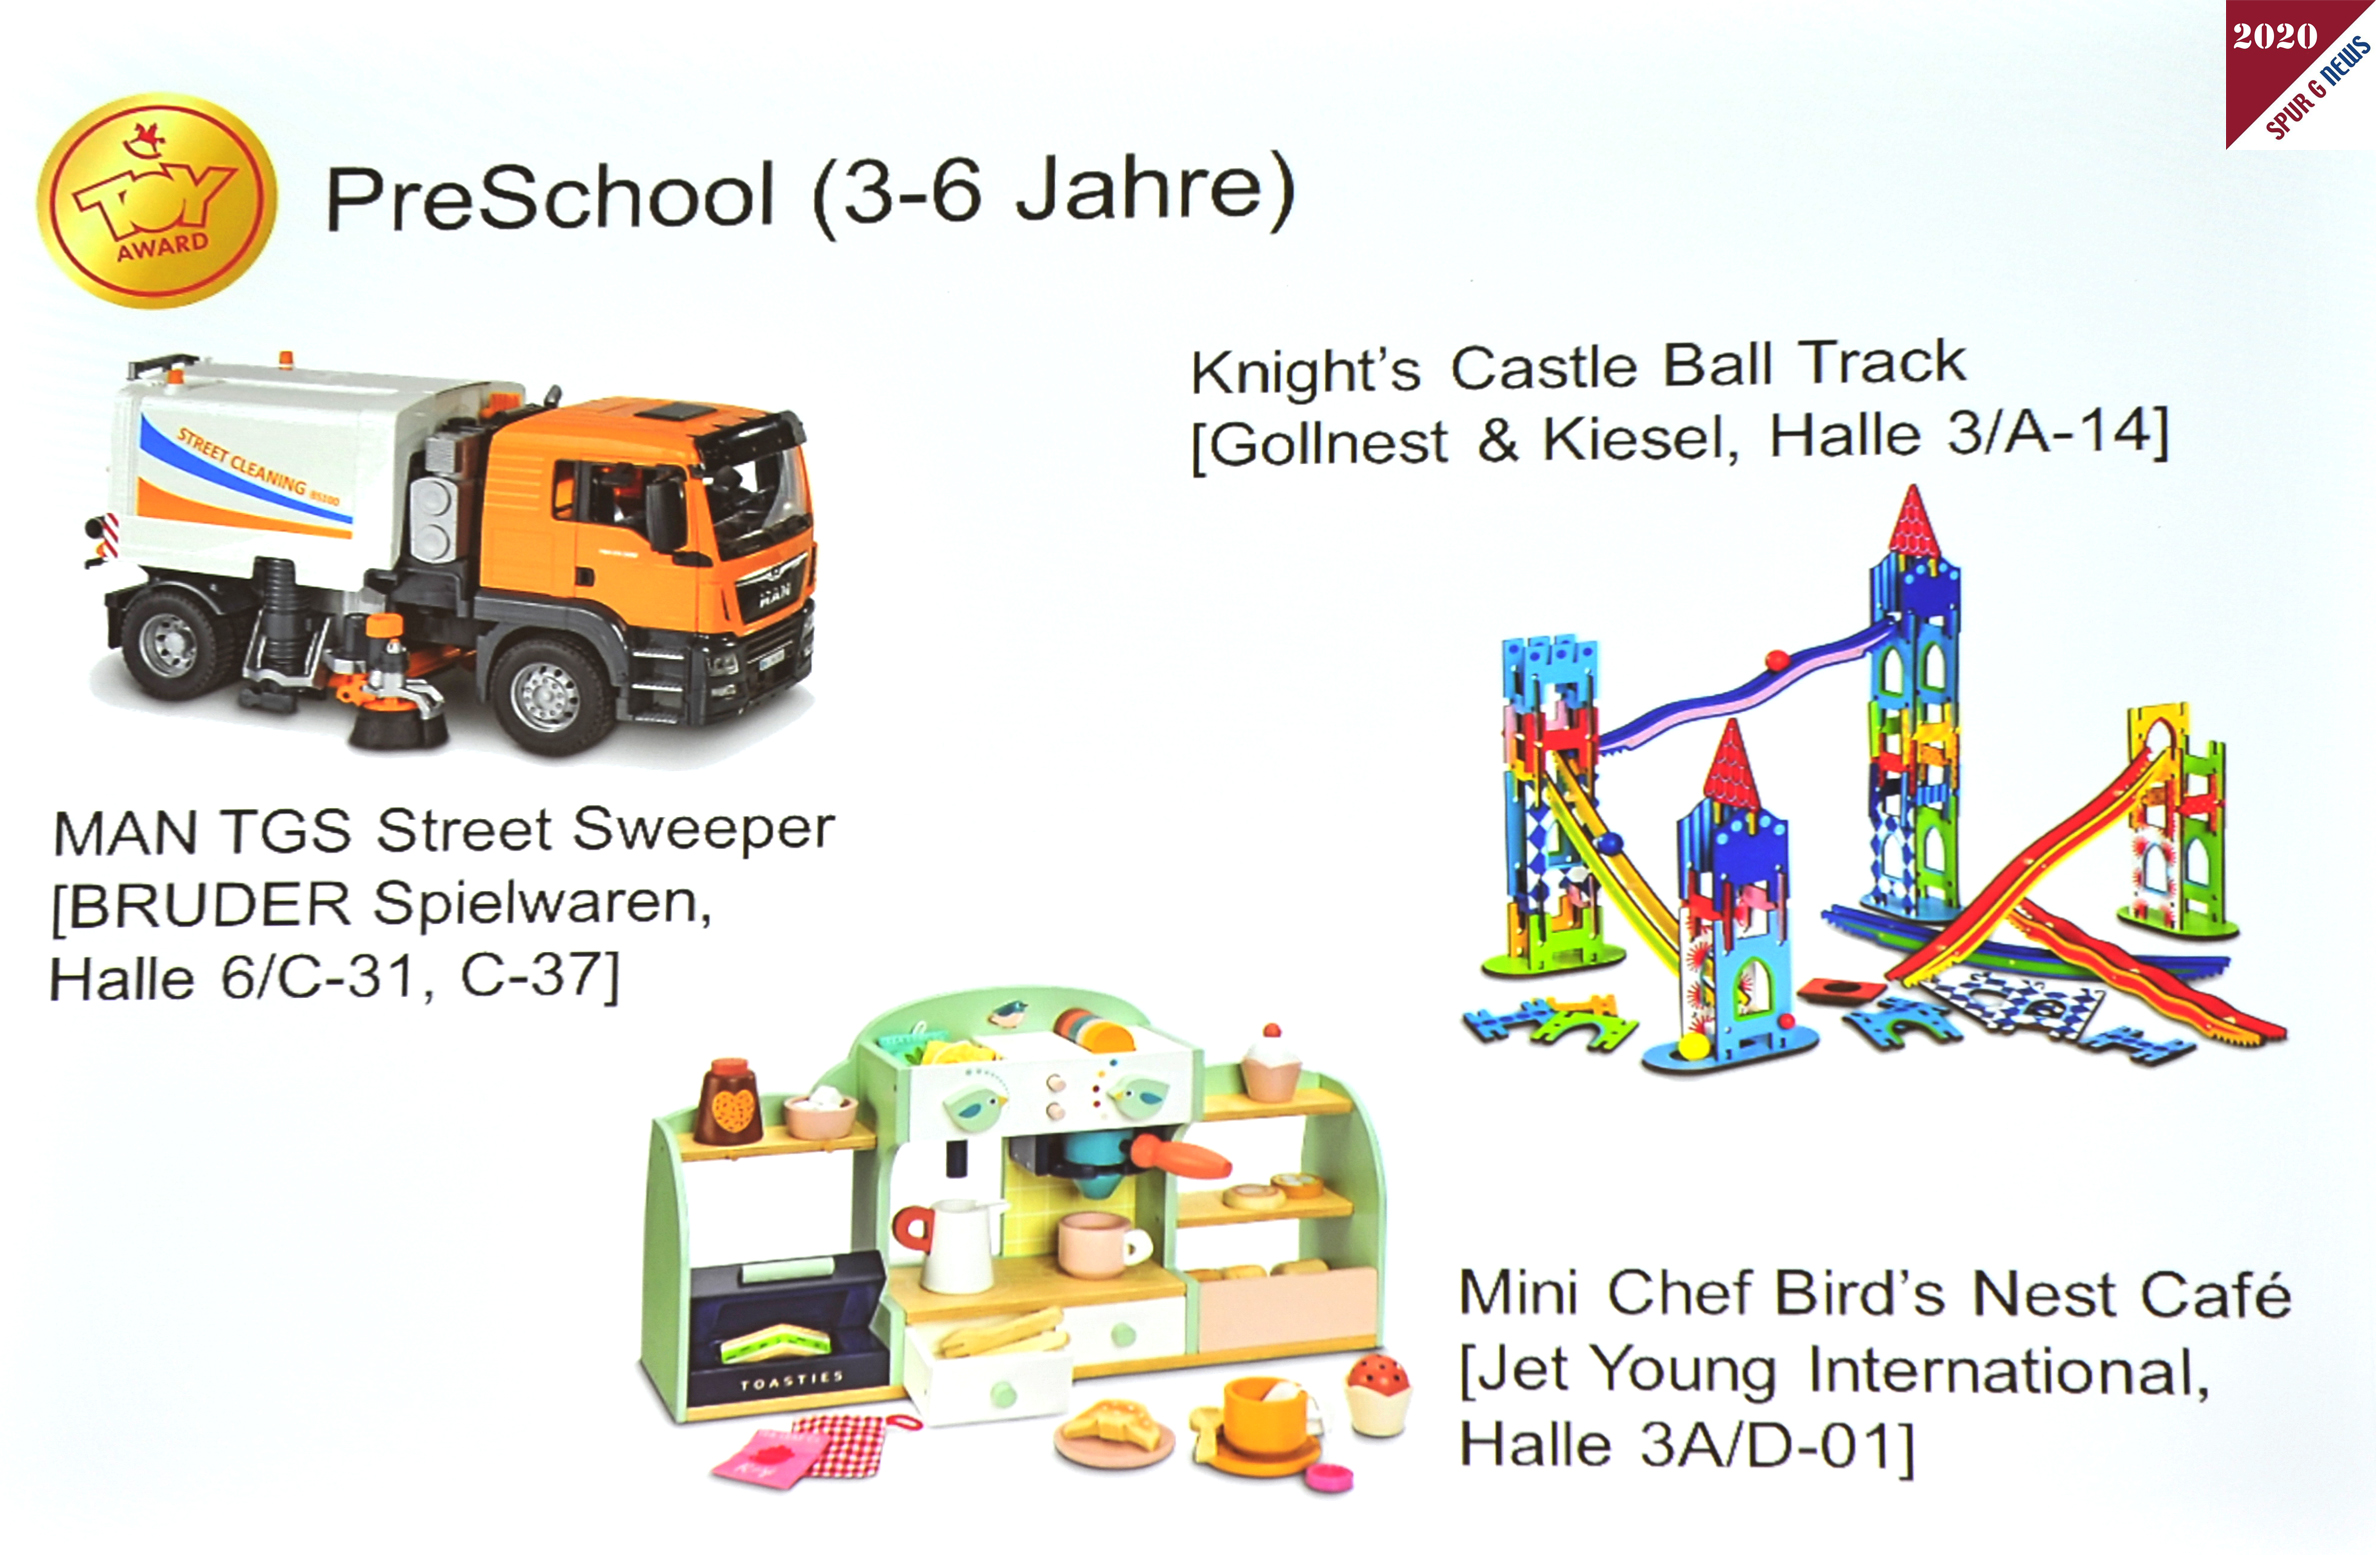 Toy Award 2020 - Pre School 3-6 Jahre, MAN TGS Street Sweeper, Knight's Castle Ball Track, Mini Che Bird's Nest Caf